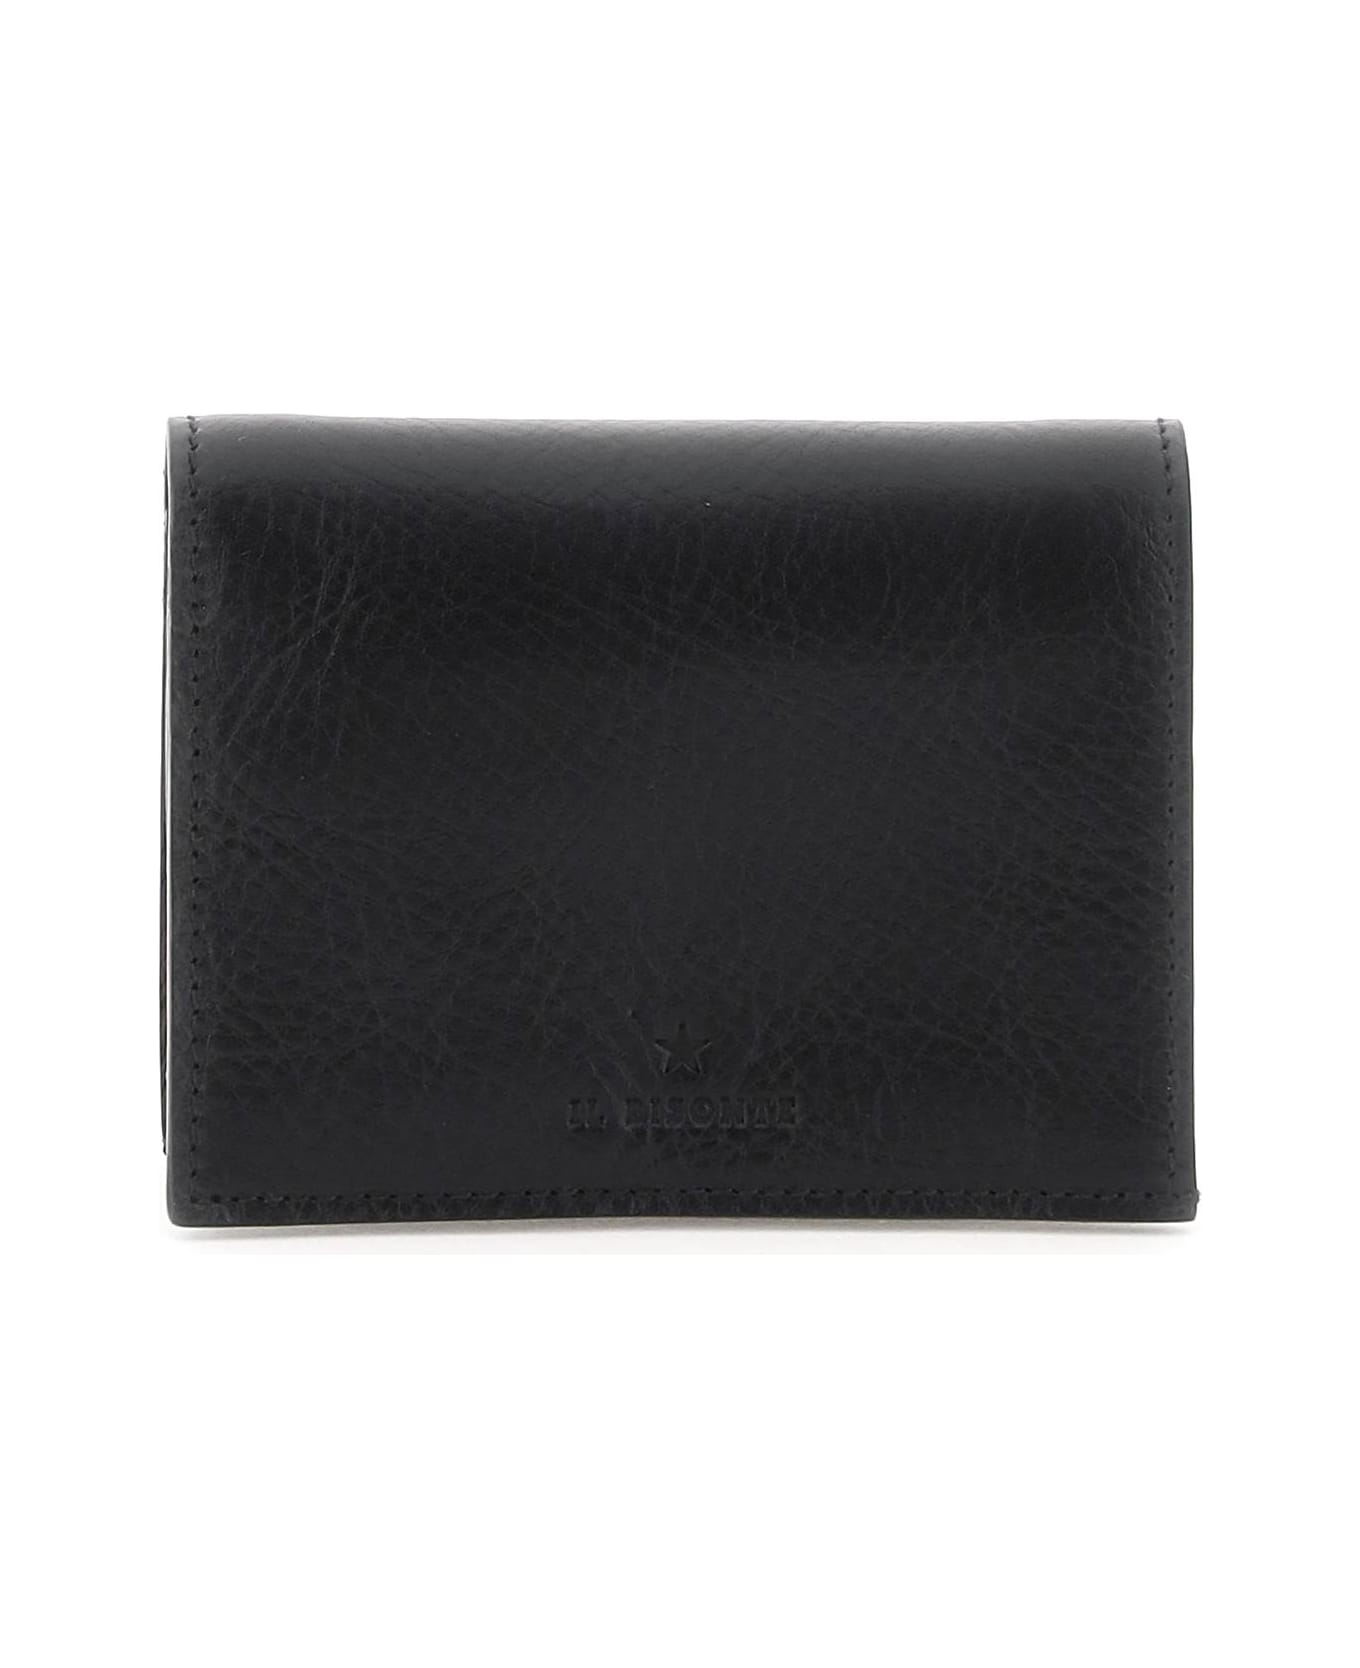 Il Bisonte Leather Wallet - NERO (Black)